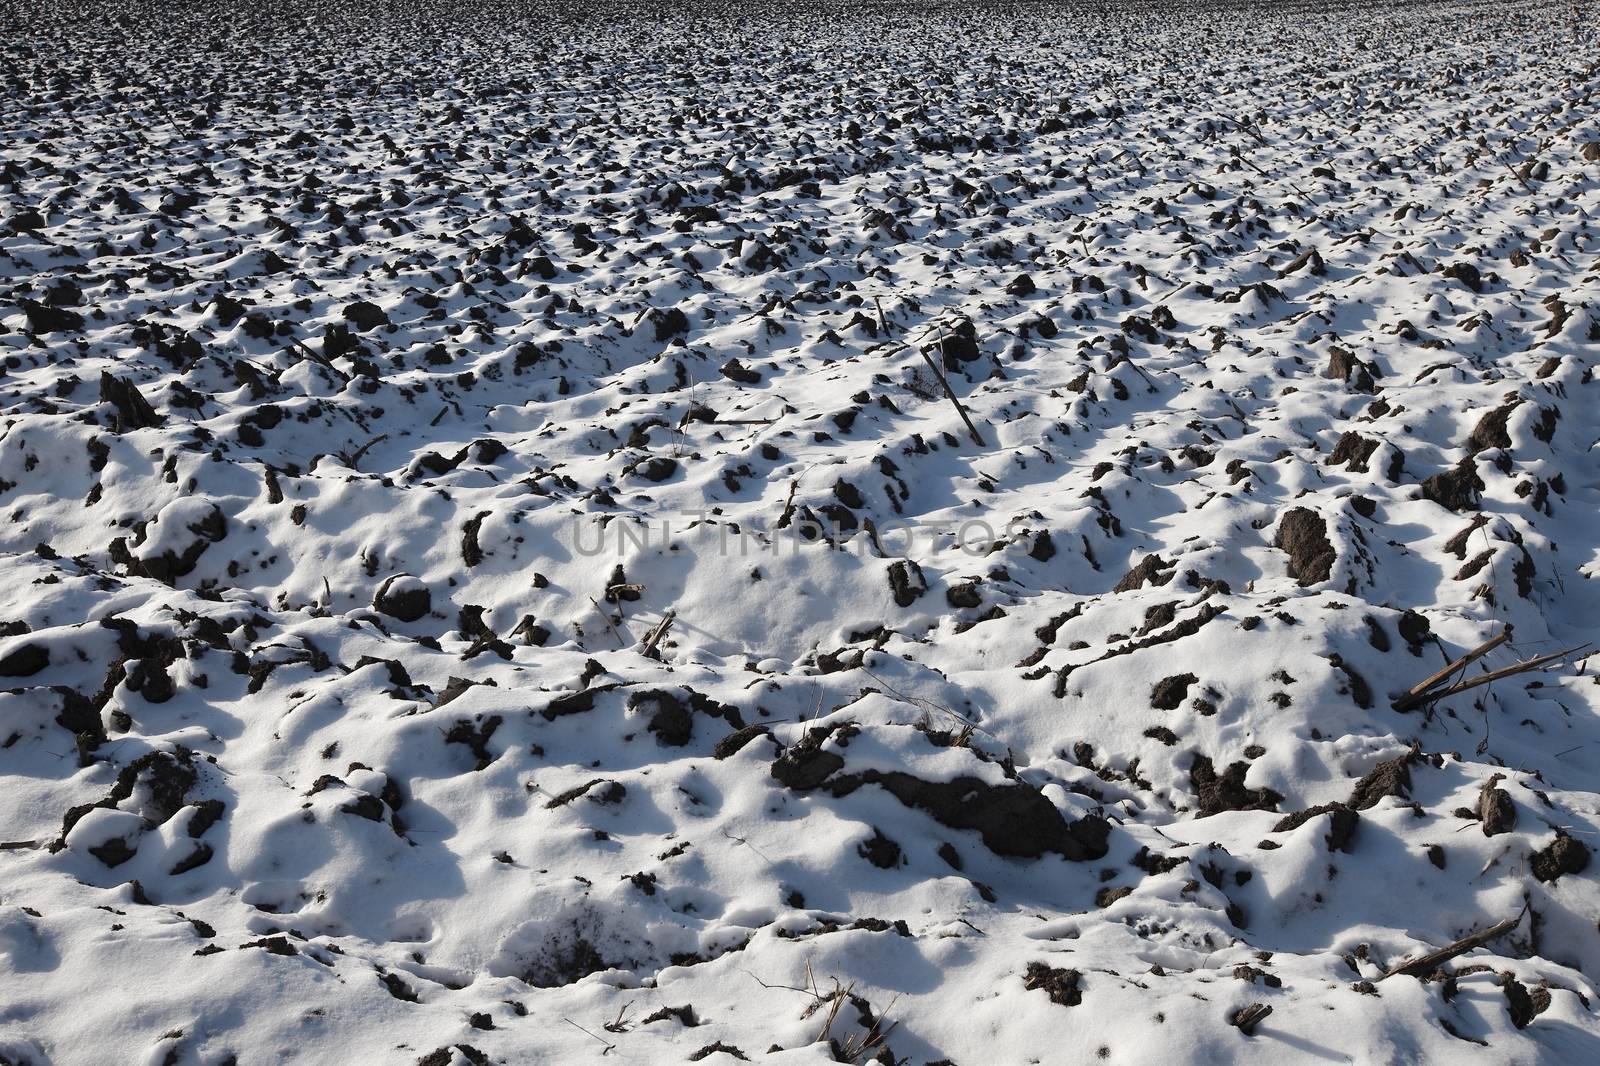 Snowy field by Gudella